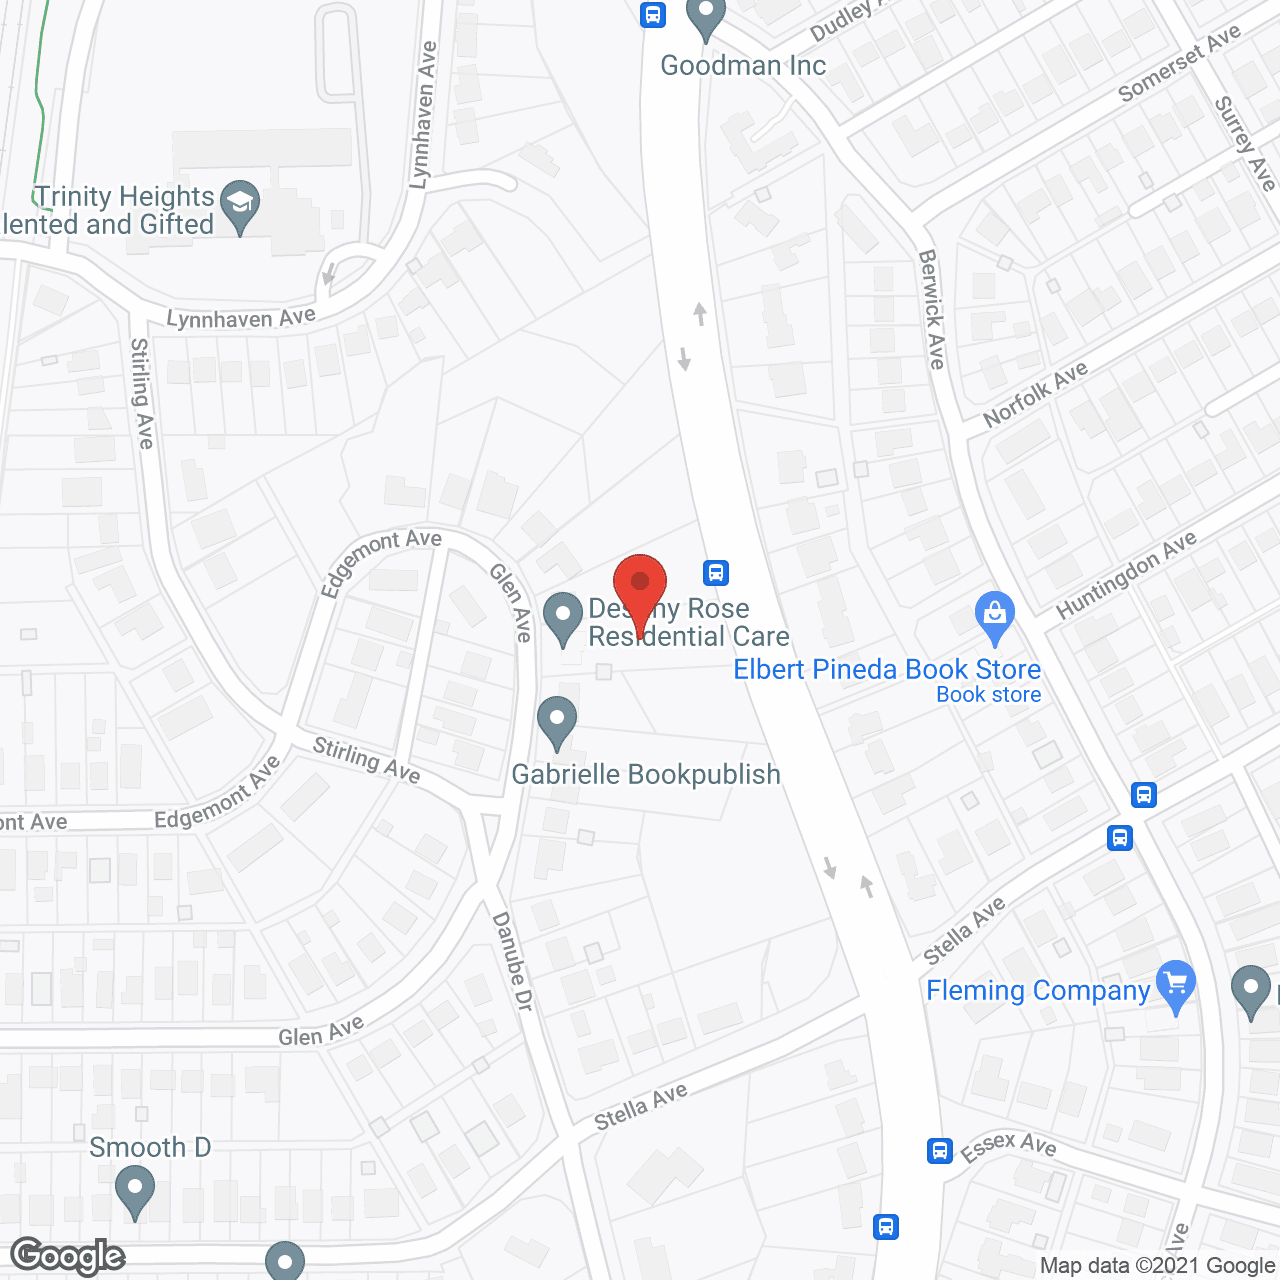 Destiny Rose Residential Care in google map